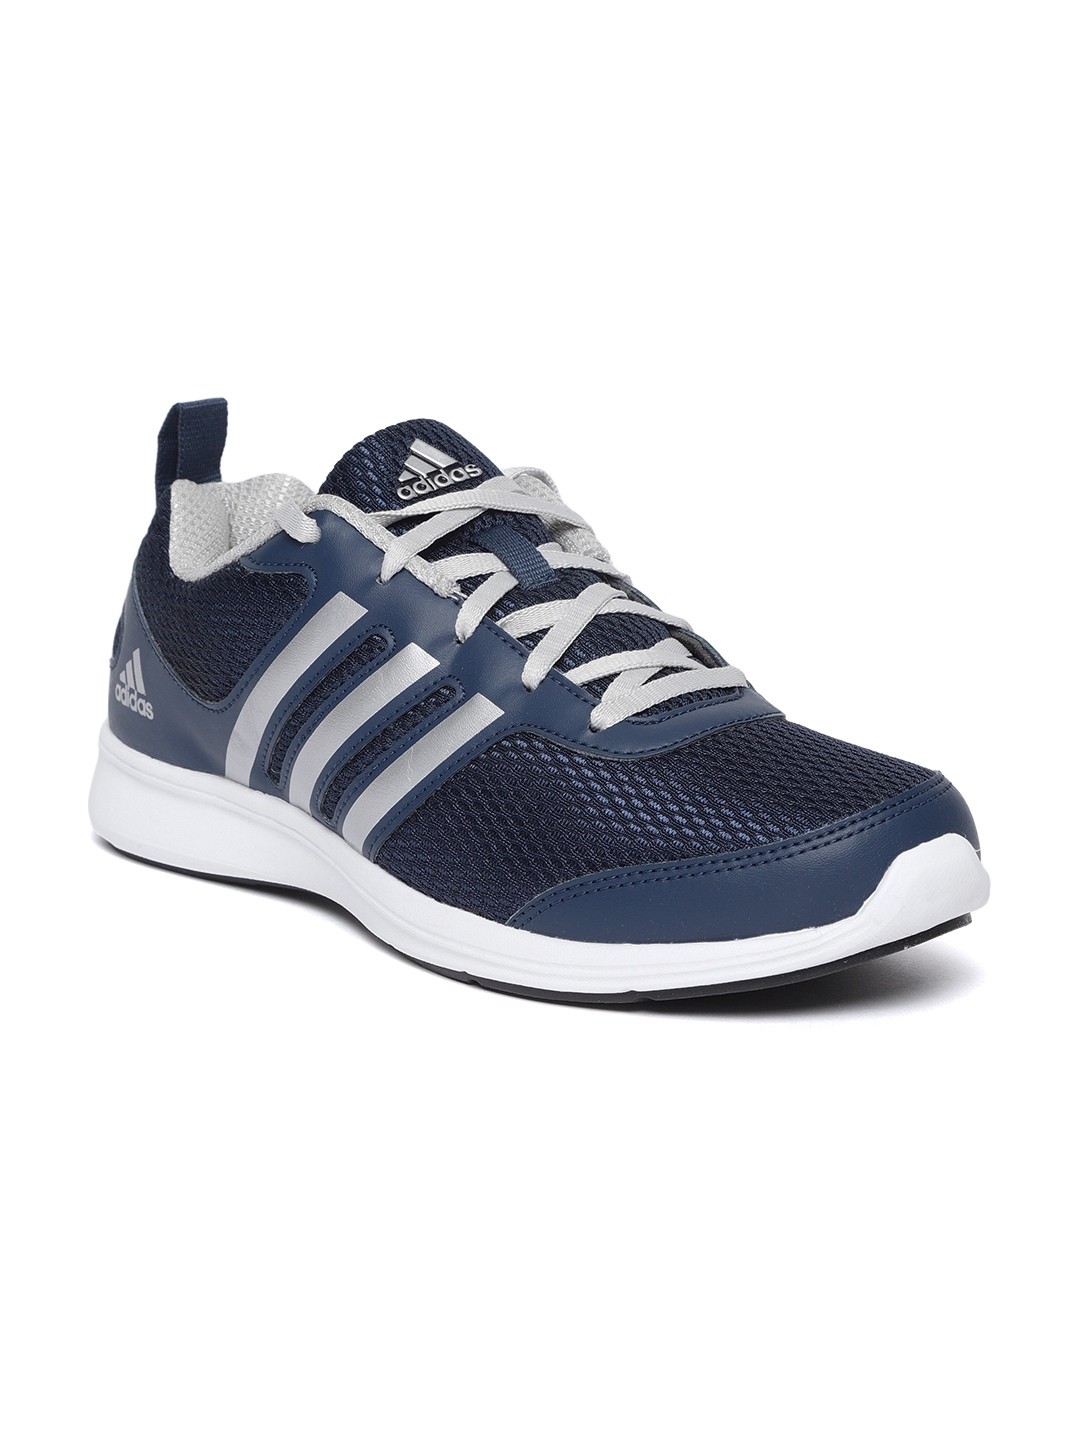 Buy ADIDAS Men Navy Blue & Silver Toned YKING Running Shoes - Sports ...